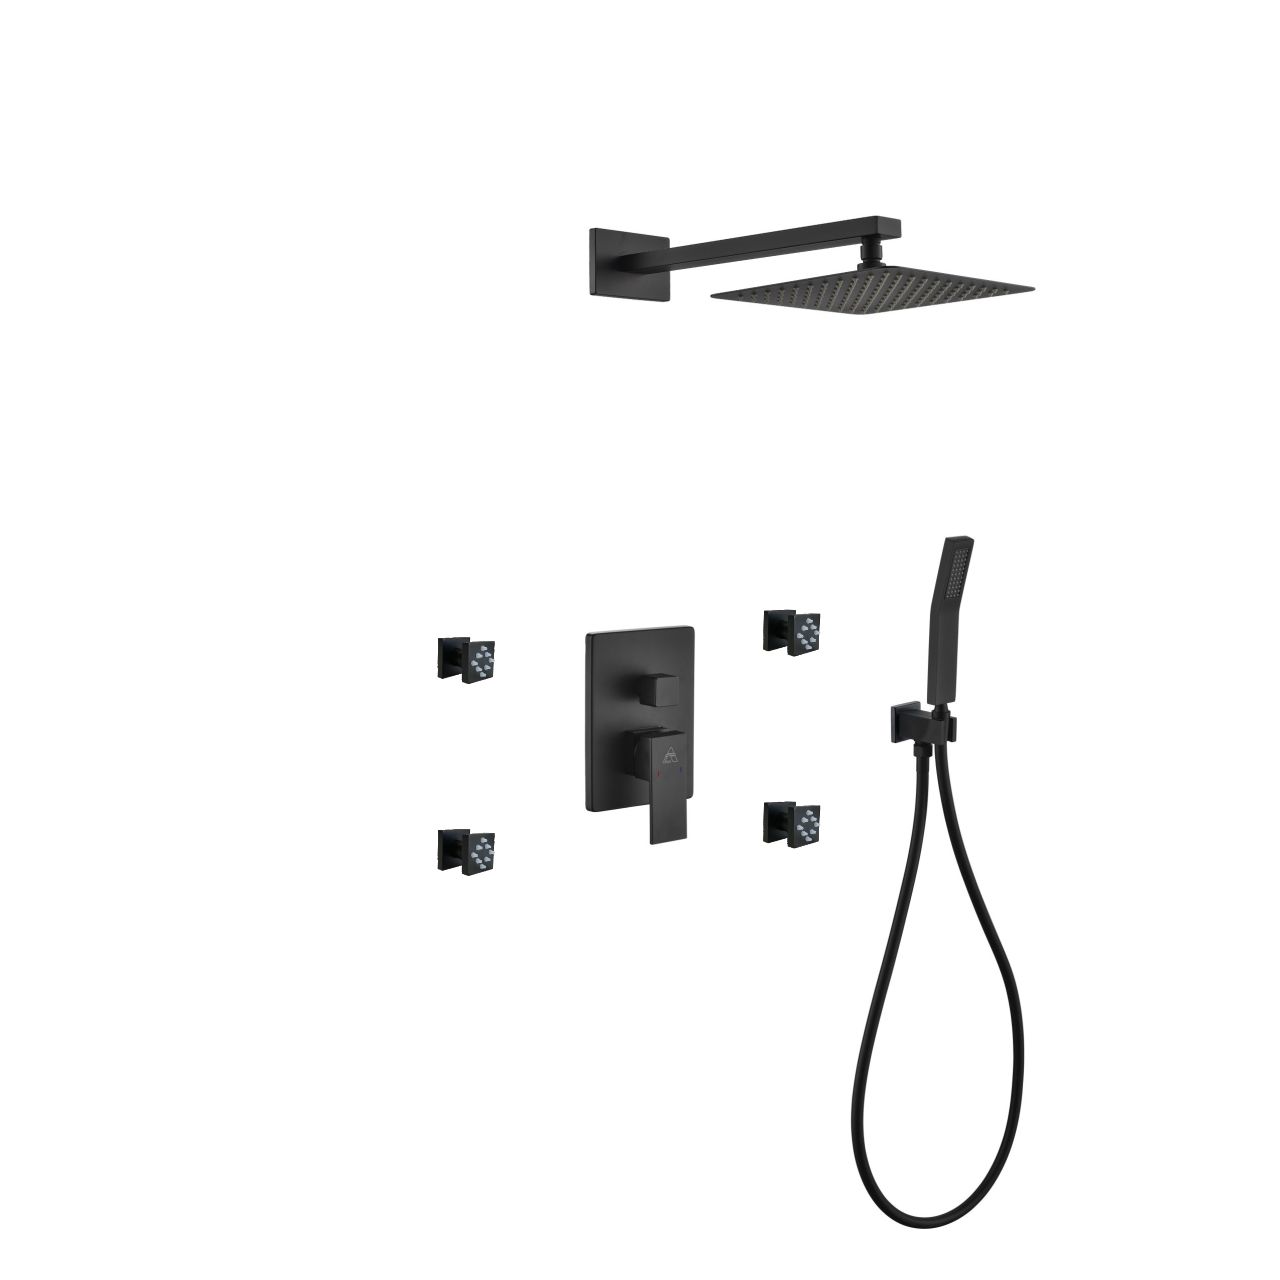 Aqua Piazza Black Shower Set w/ 8″ Square Rain Shower, 4 Body Jets and Handheld